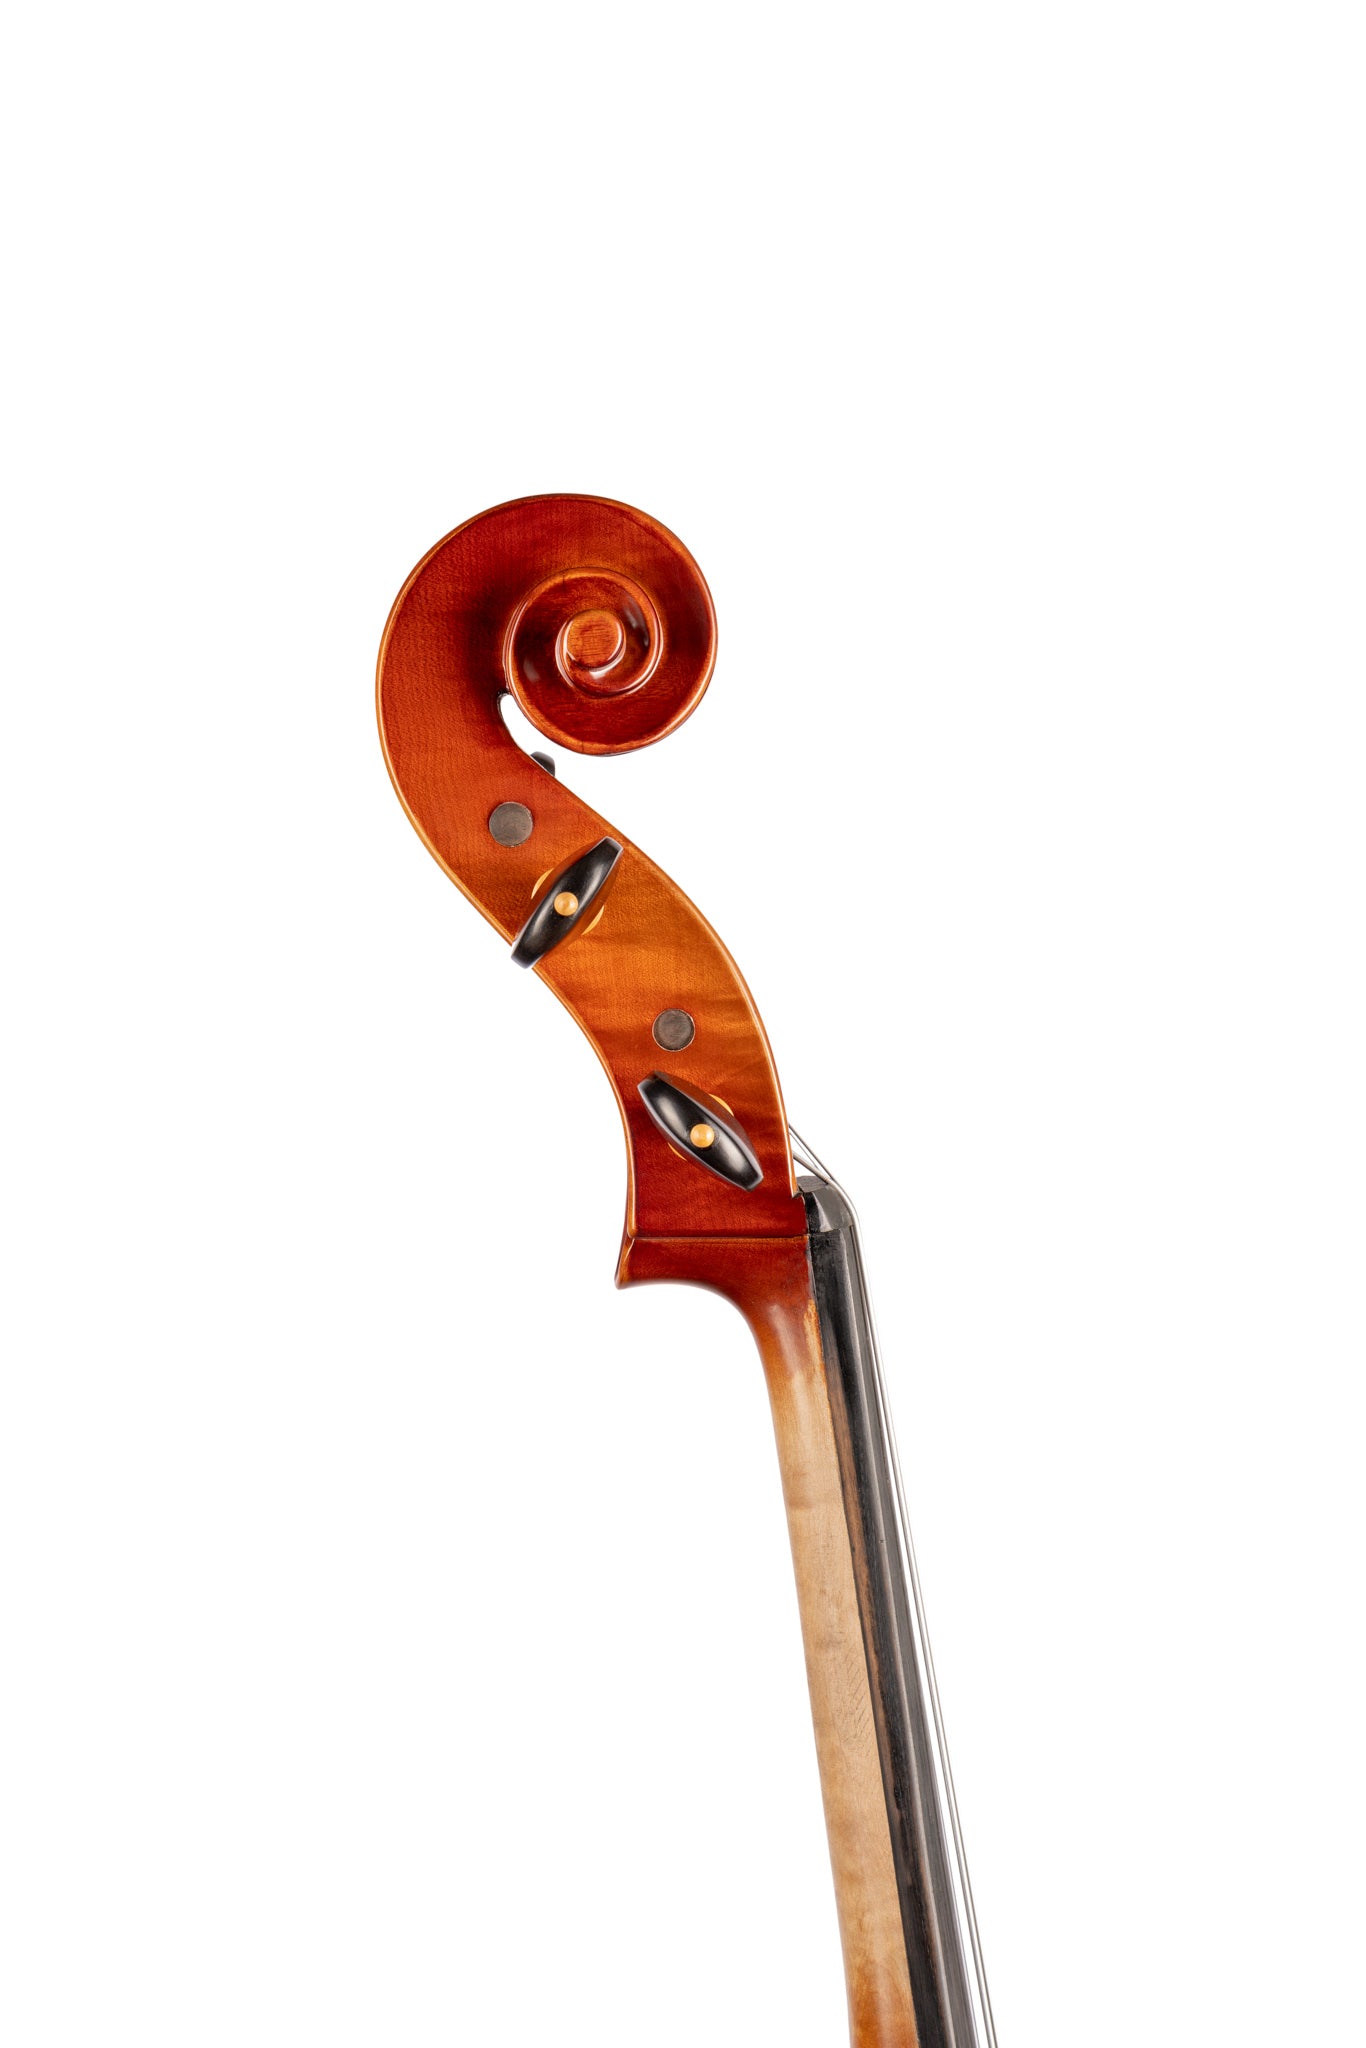 WY-300 Cello